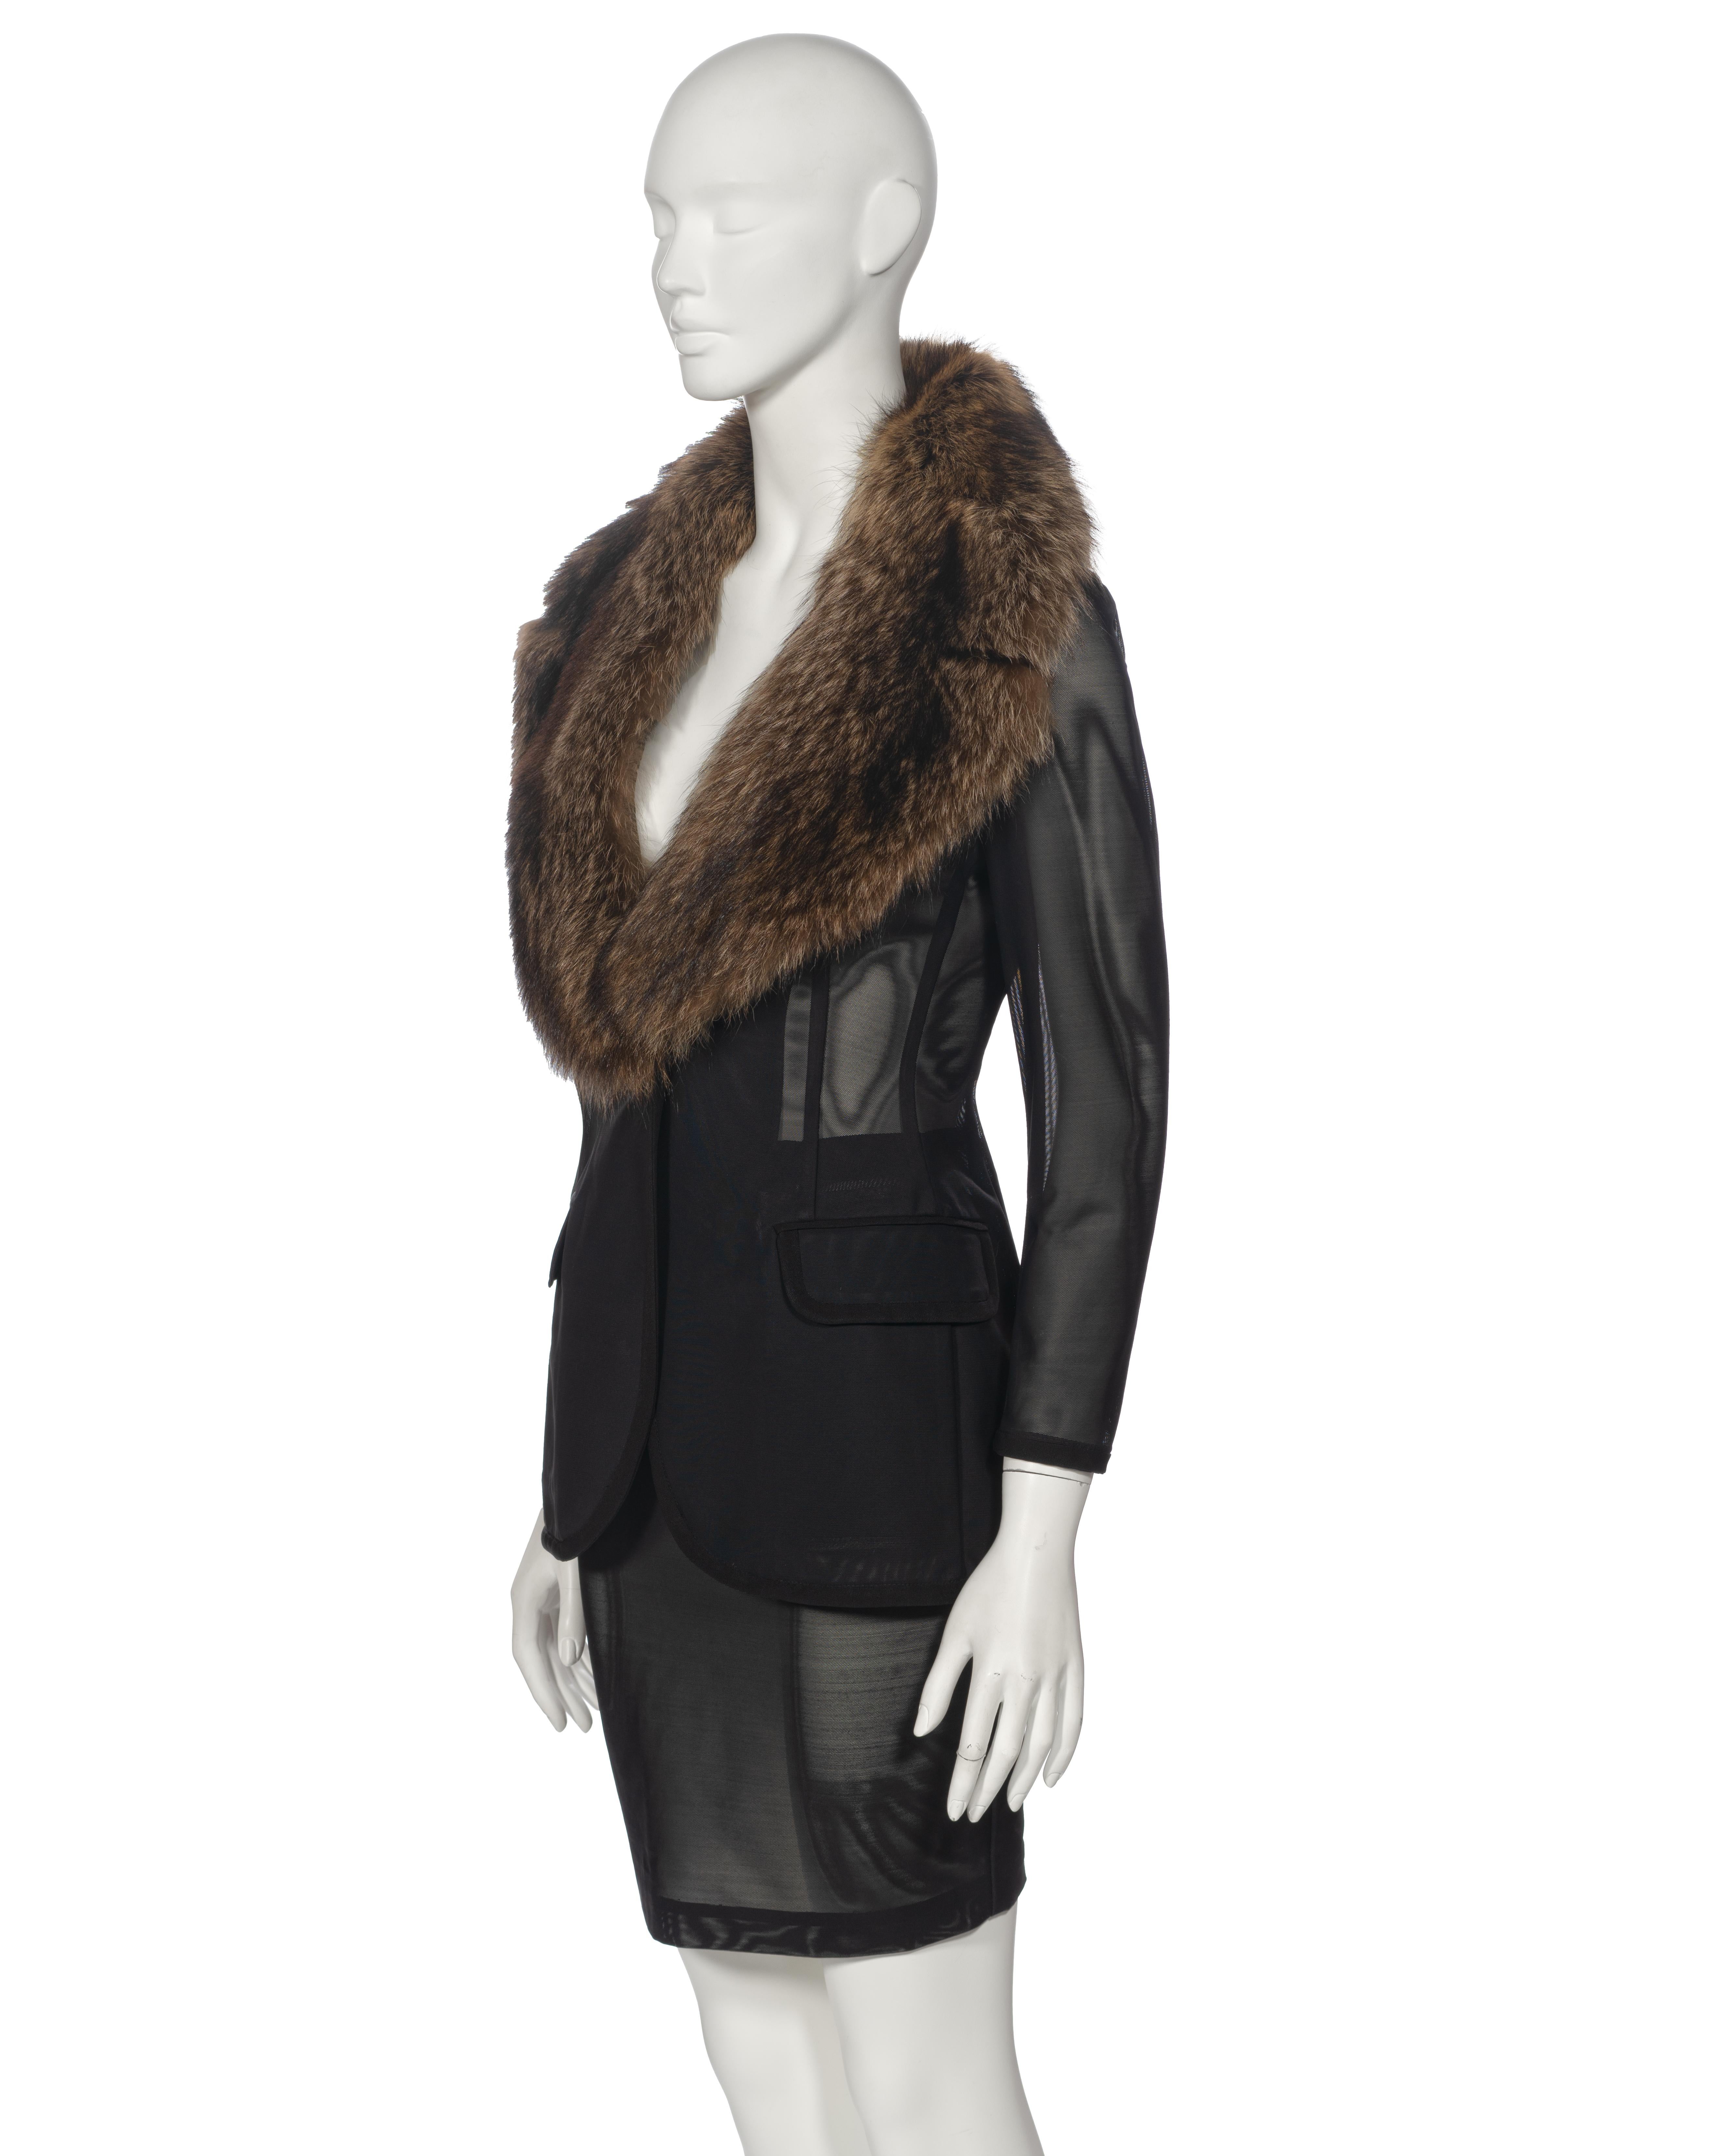 Dolce & Gabbana Black Power Net Skirt Suit with Fur Collar, fw 1995 9